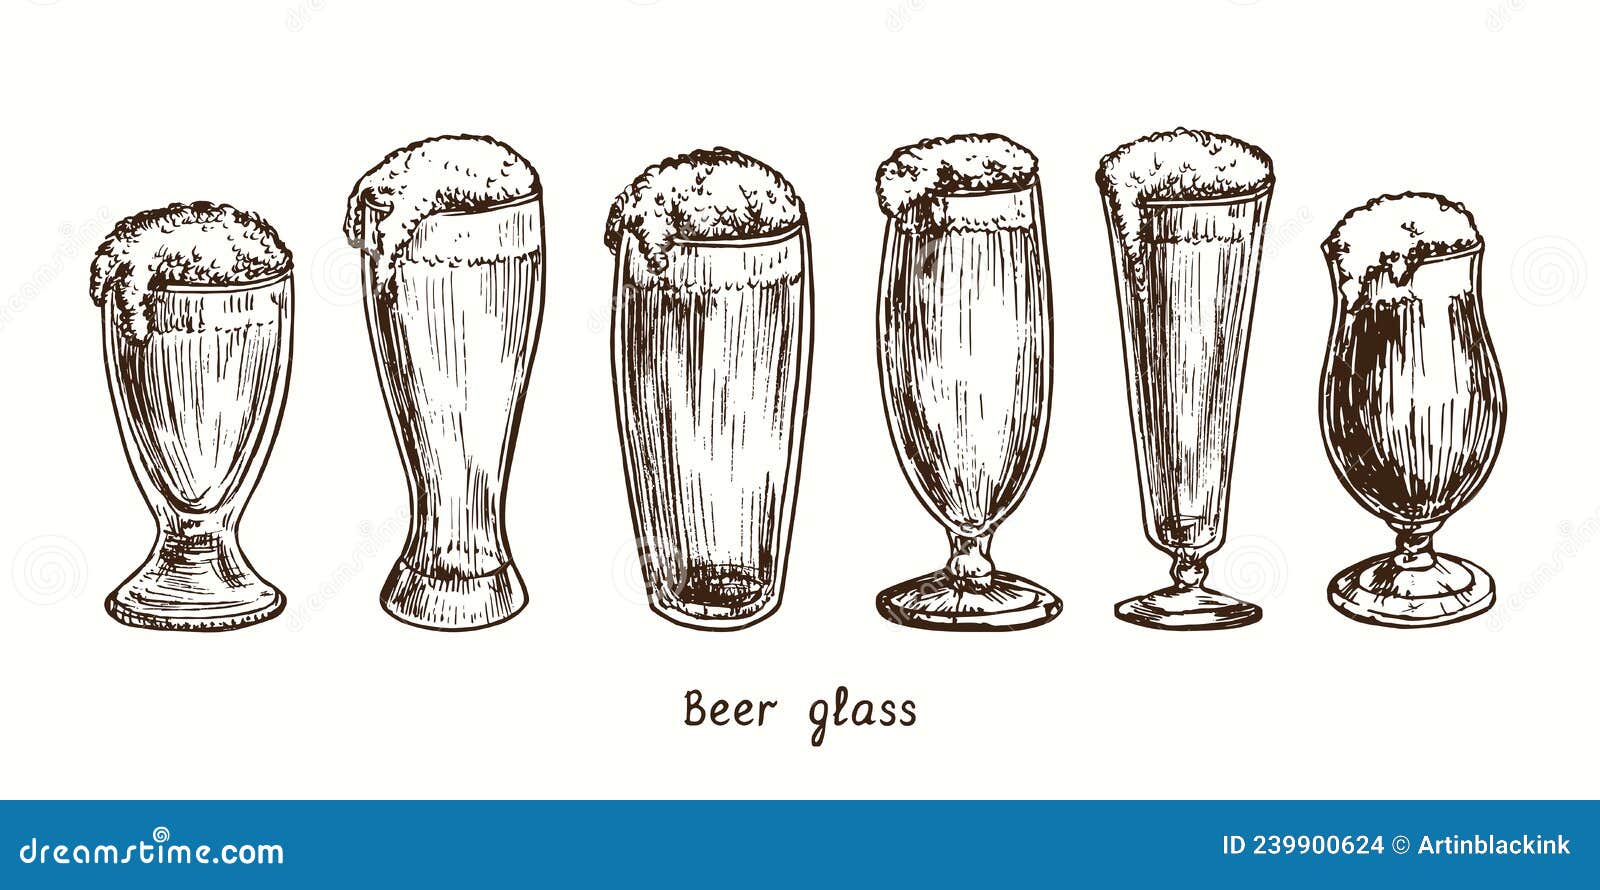 beer glass types, schooner, weizen, willi becher willybecher, pilstulpe, pilsner and stemmed pokal. ink black and white doodle